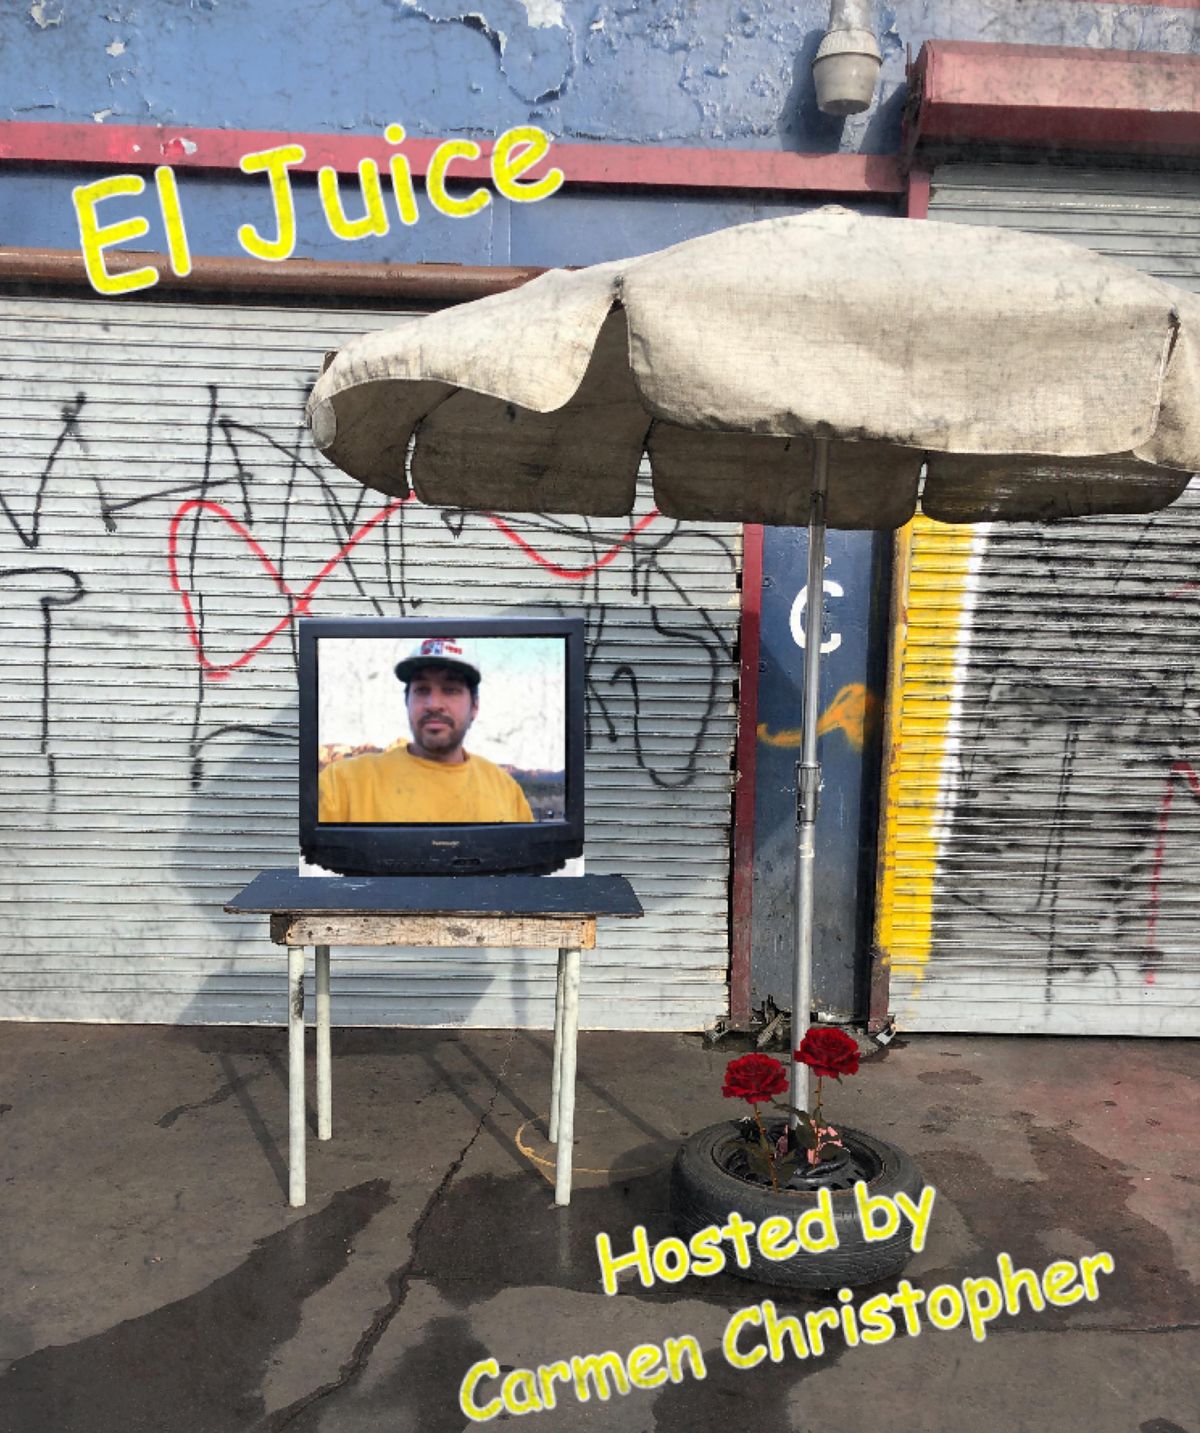 El Juice hosted by Carmen Christopher